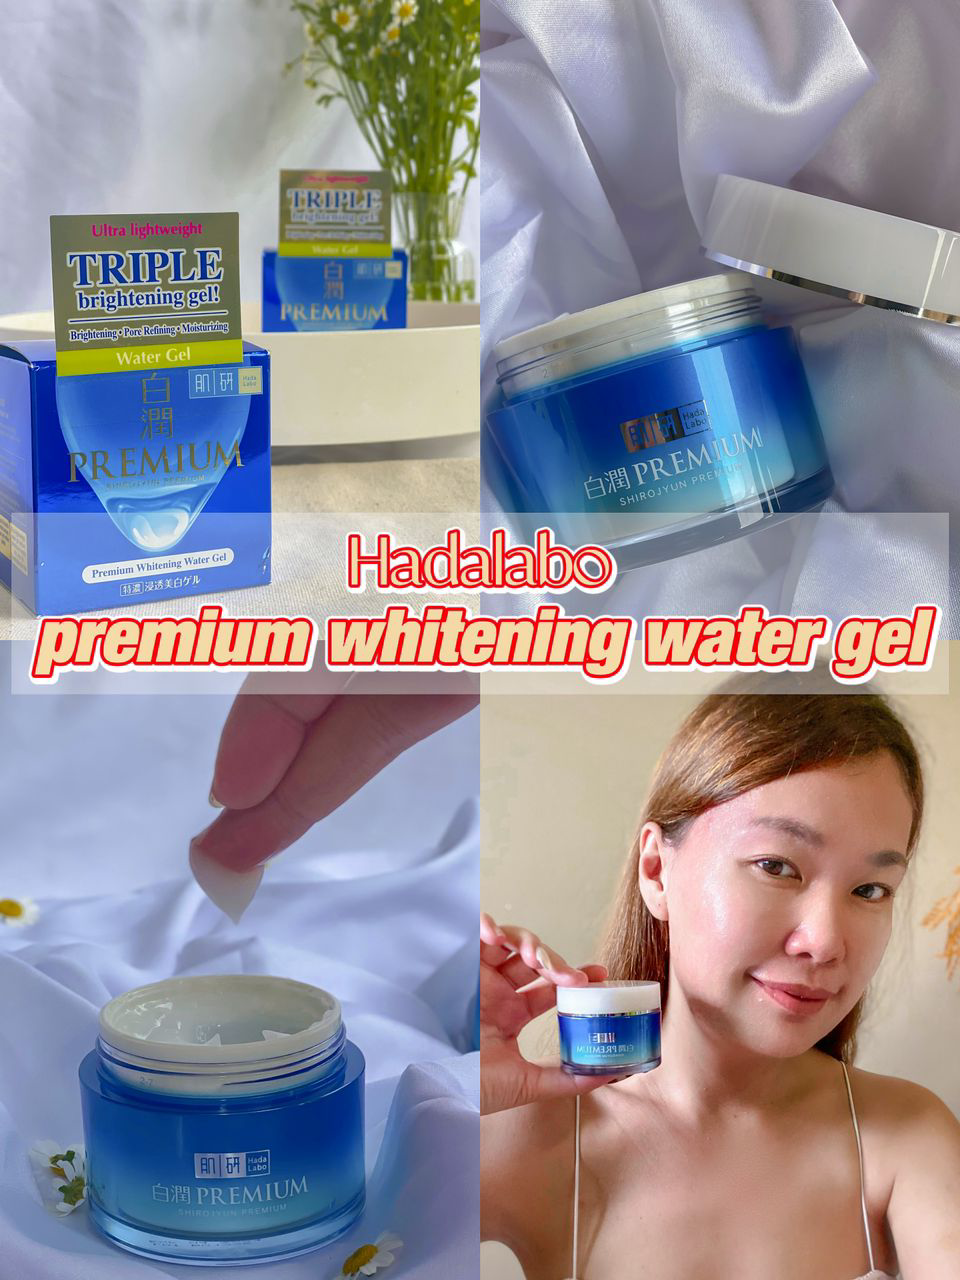 premium whitening gel プレミアムホワイトニングジェル - オーラルケア